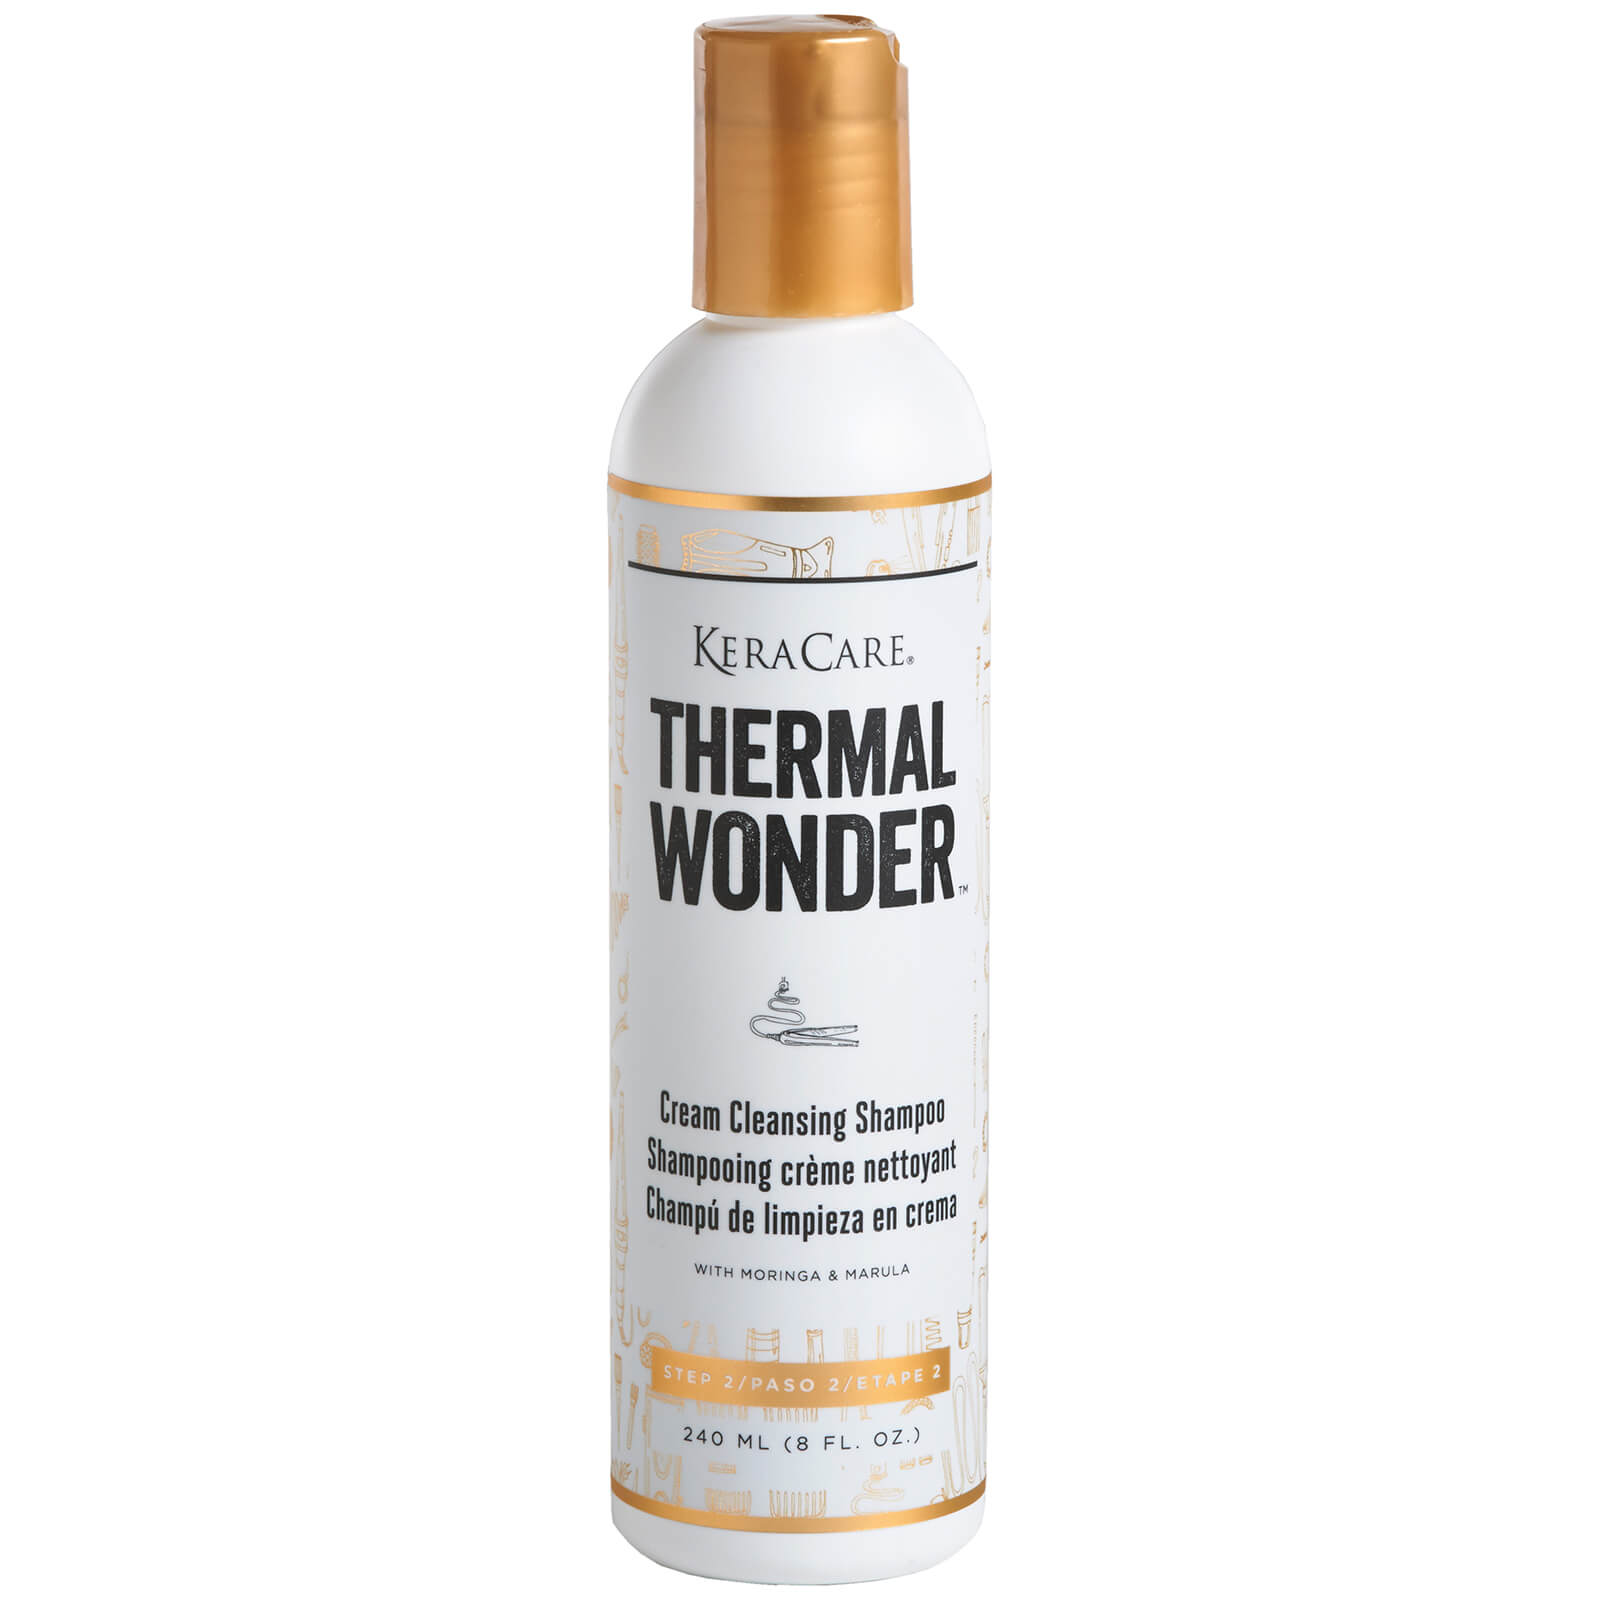 KeraCare Thermal Wonder Cream Cleansing Shampoo 240ml